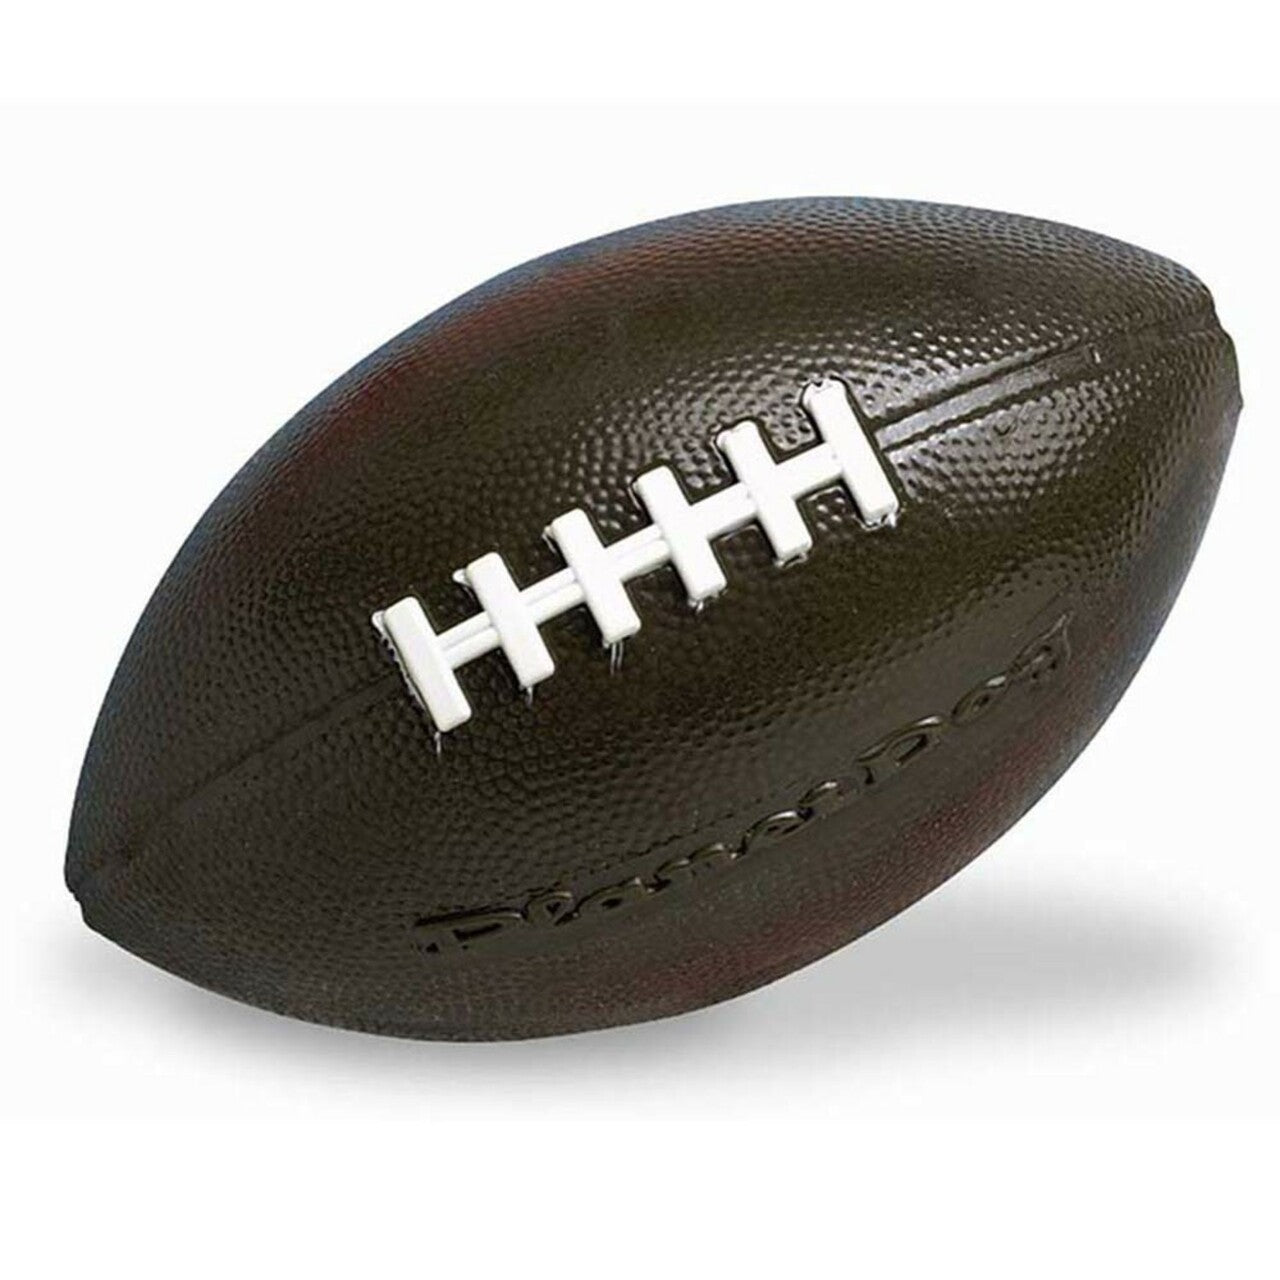 Orbee Tuff Sports Balls Football Image